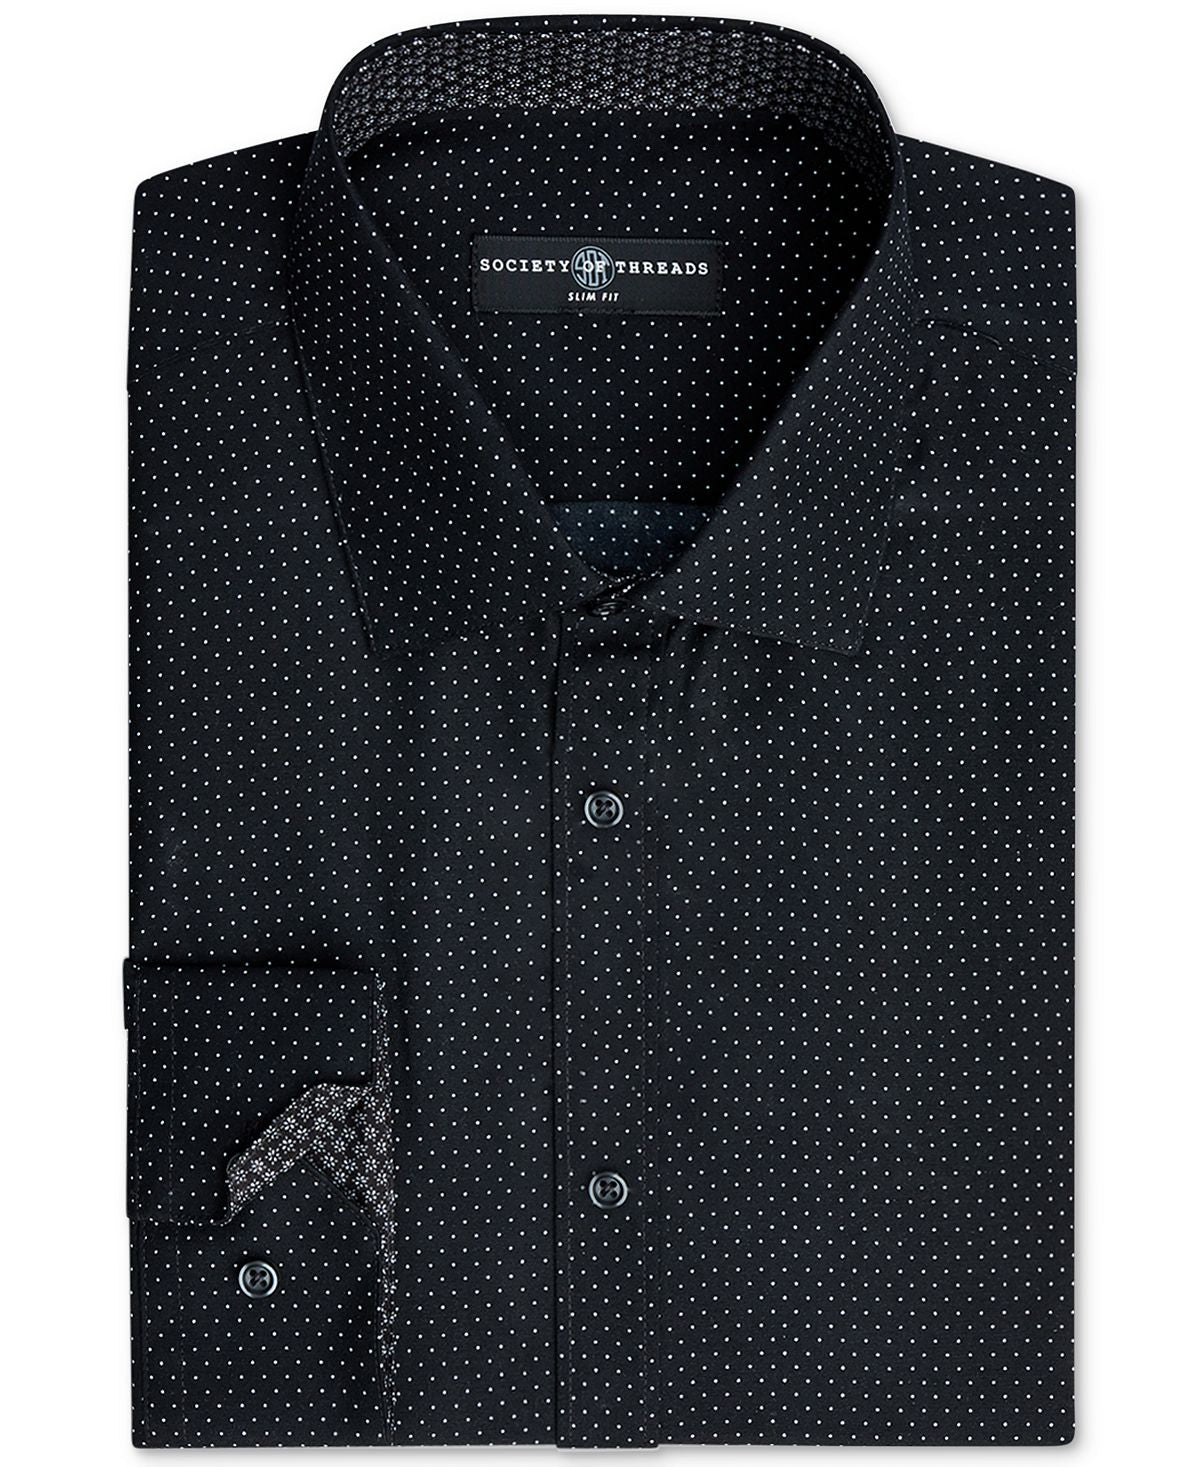 Society Of Threads Slim-fit Non-iron Performance Print Dress Shirt Black